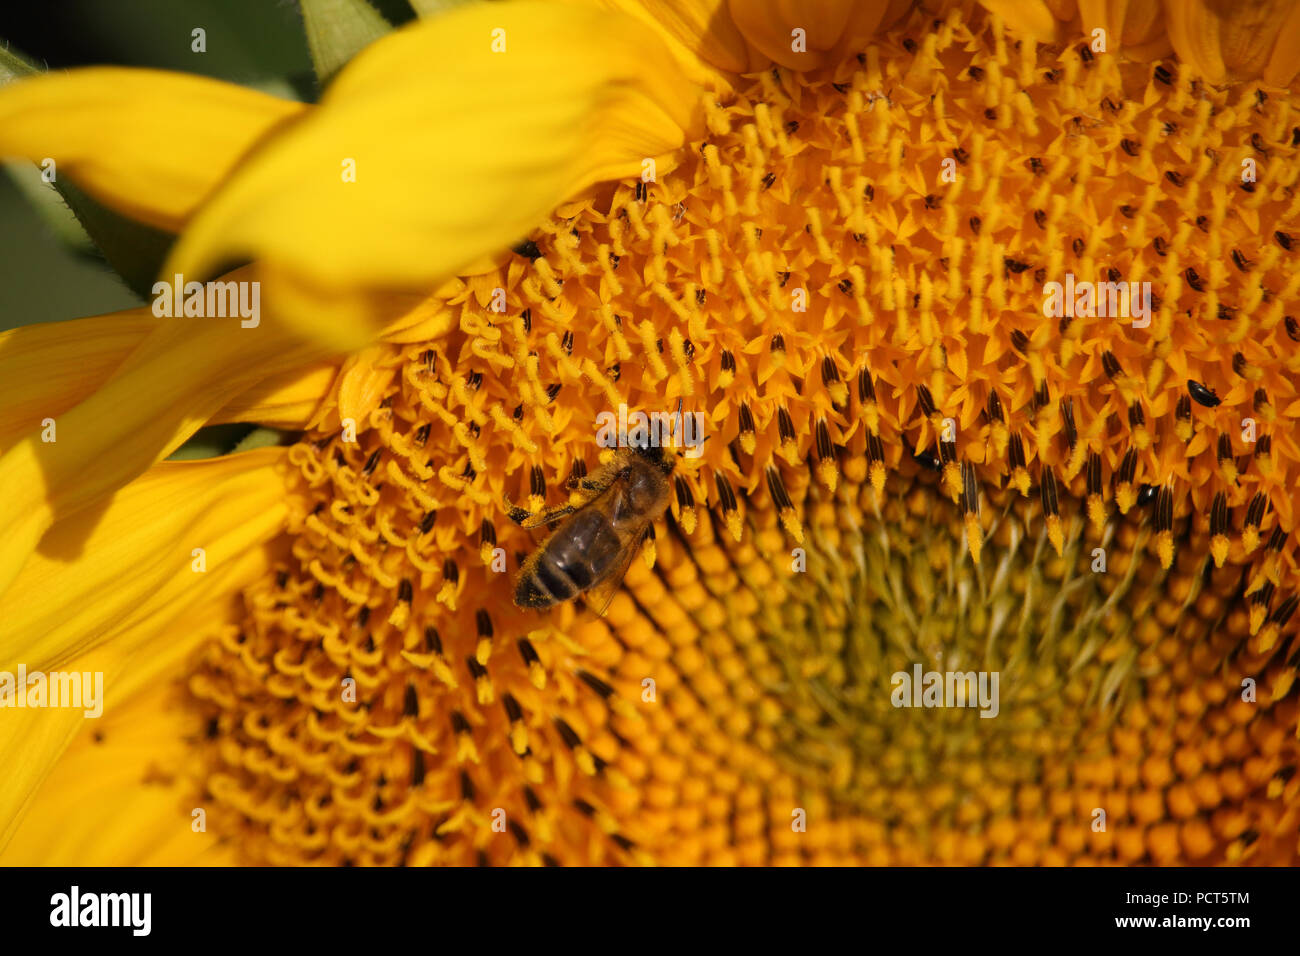 The bee gathers honey at sunflower photo Stock Photo